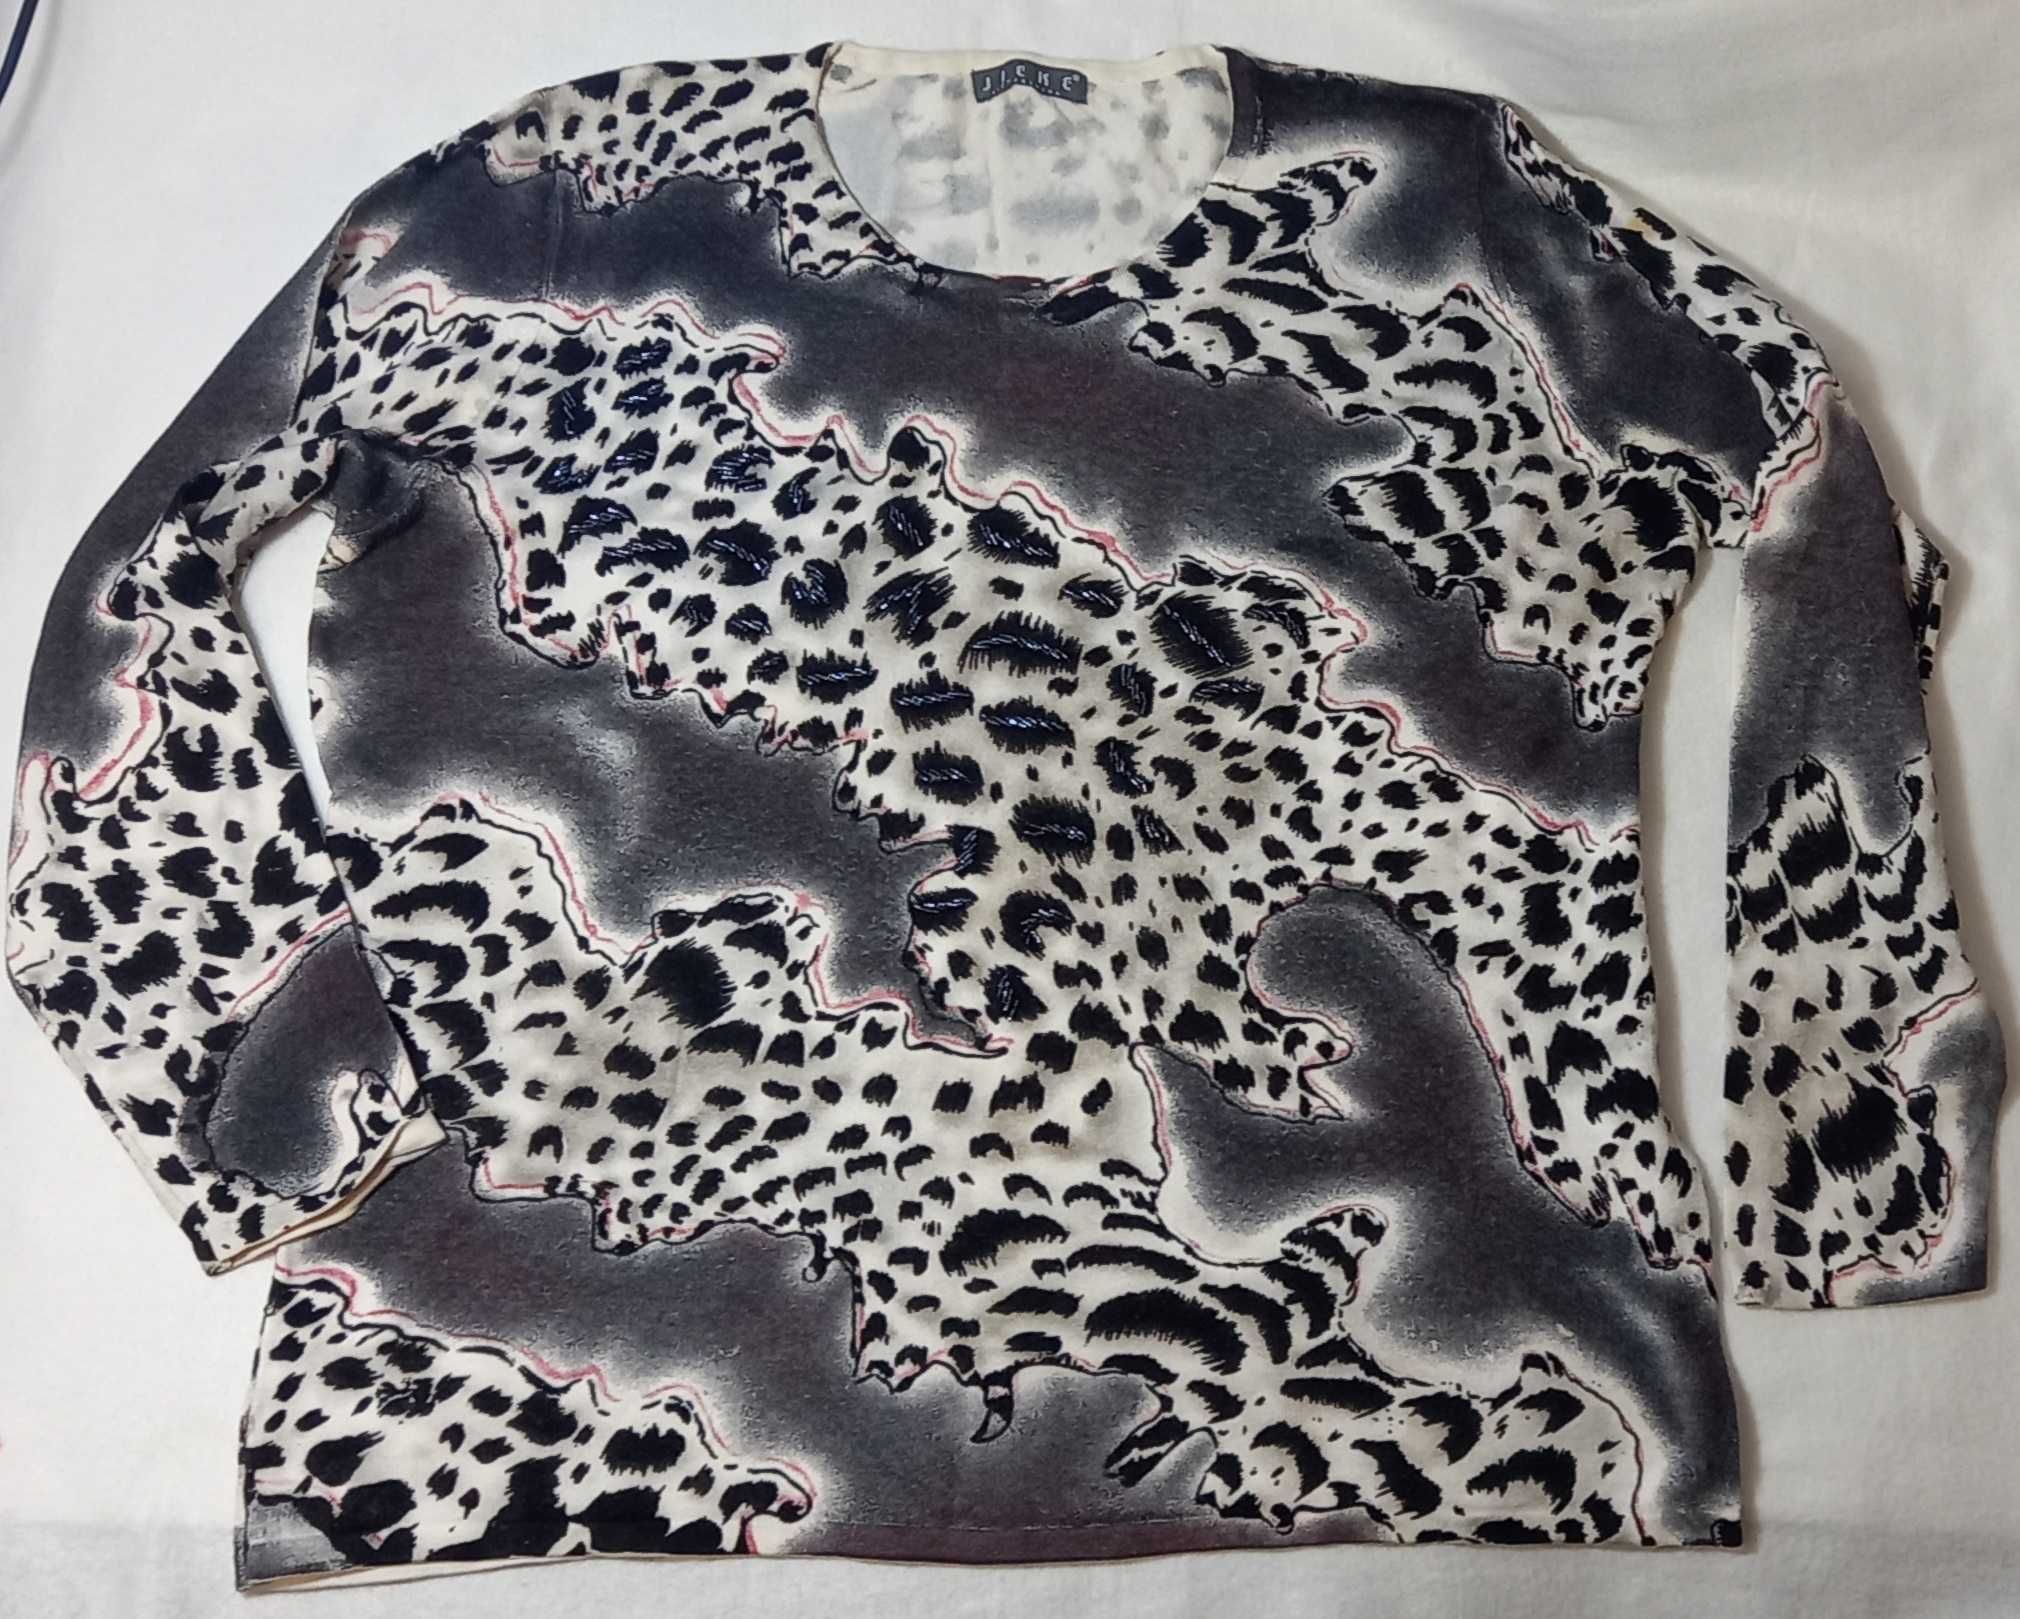 JIEKE rozm.  XL (46-48) panterkowy lekki sweterek z koralikami